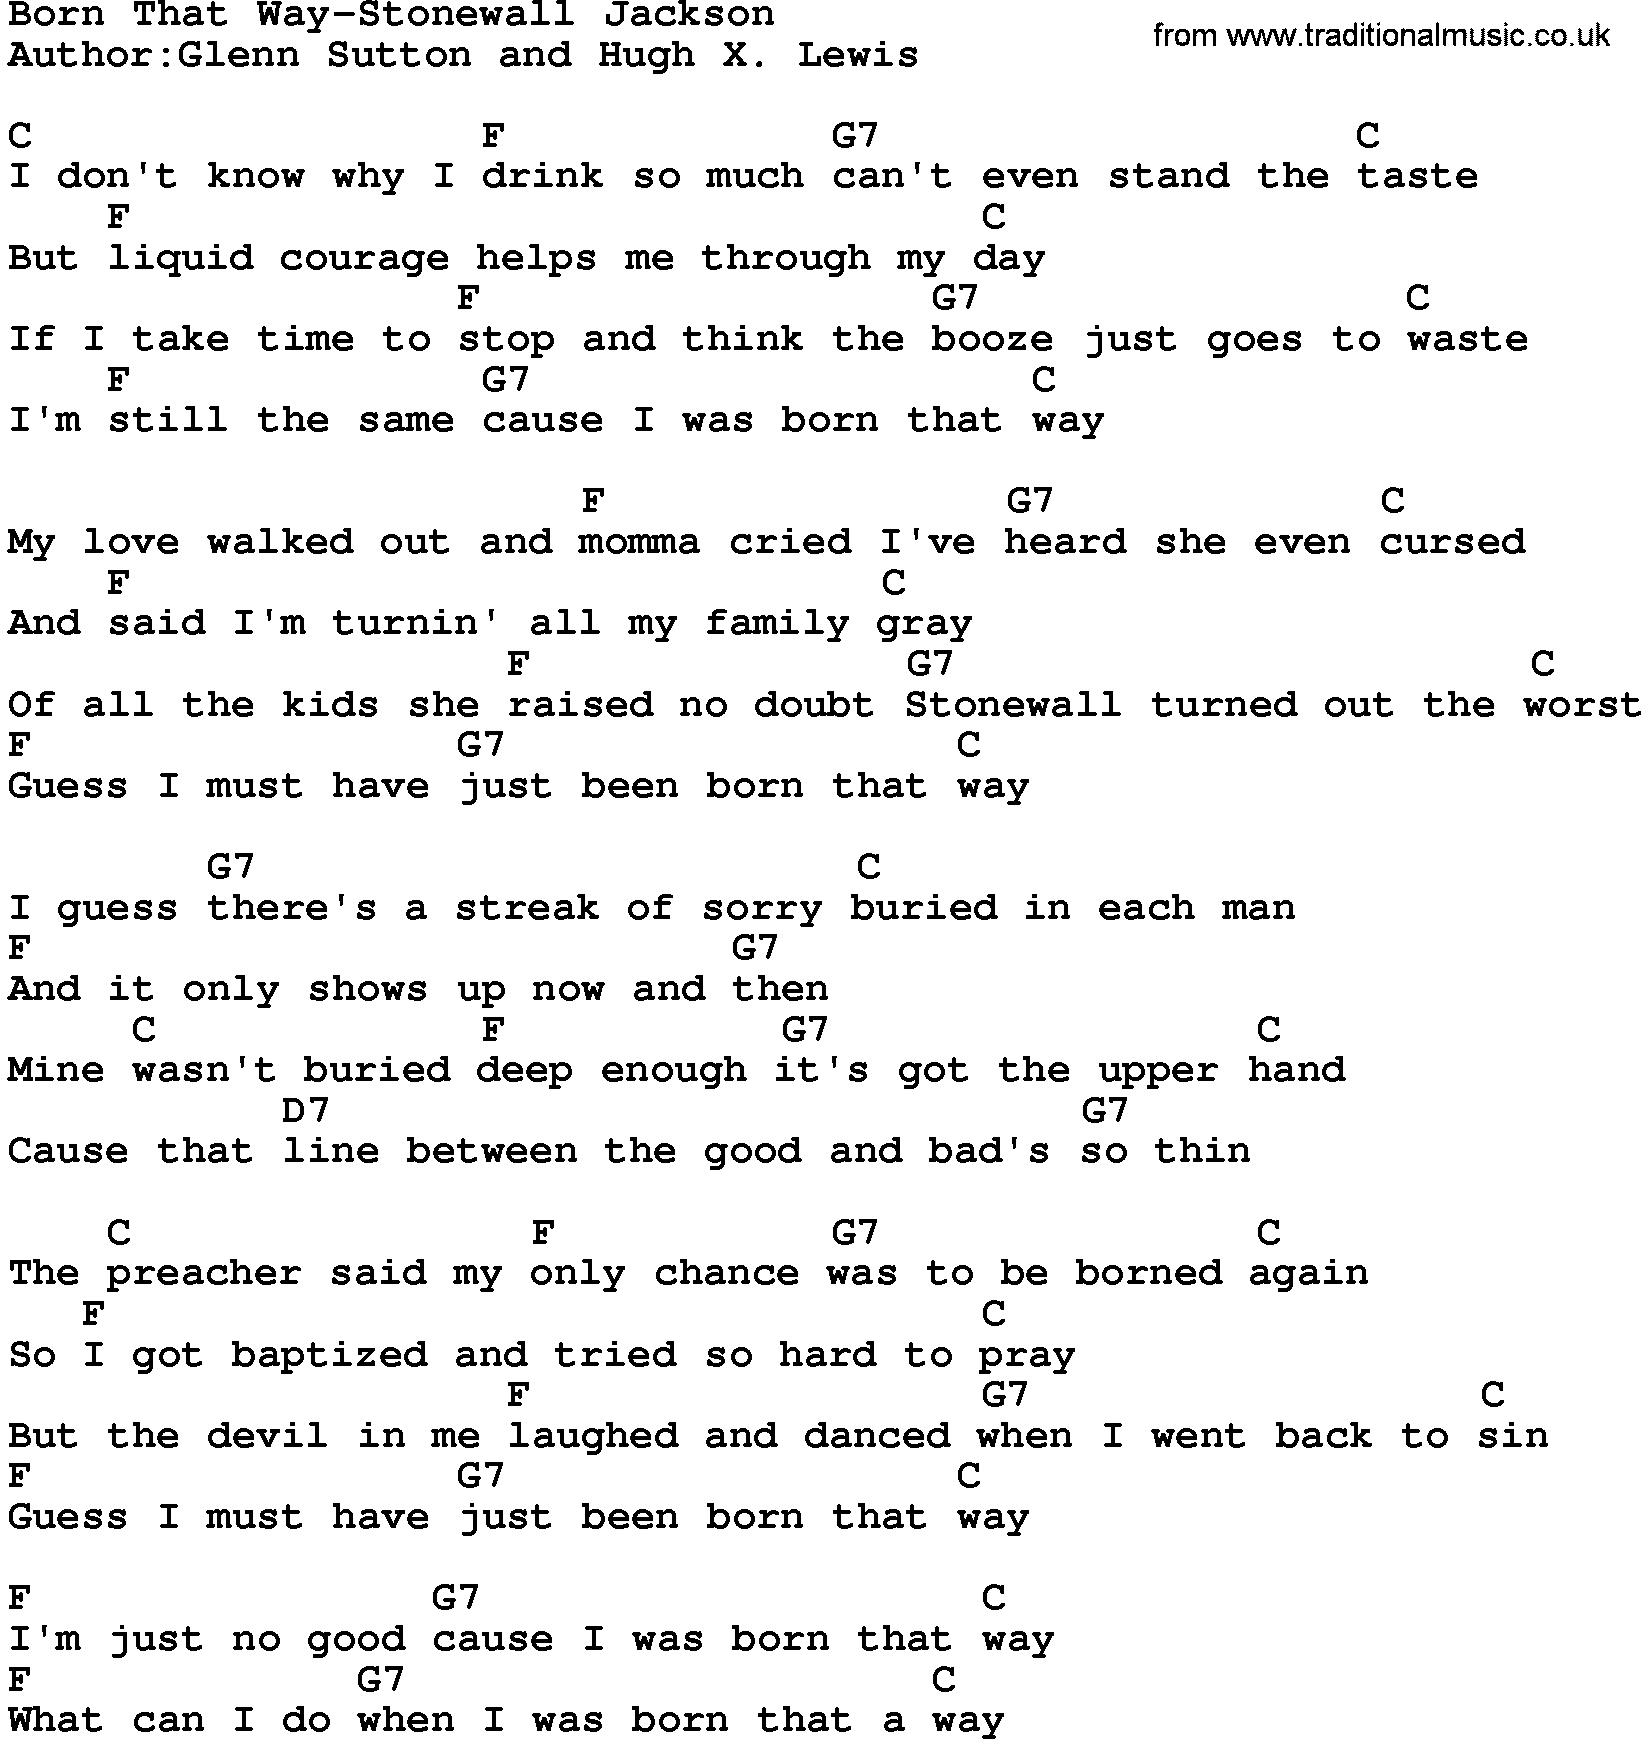 Country music song: Born That Way-Stonewall Jackson lyrics and chords